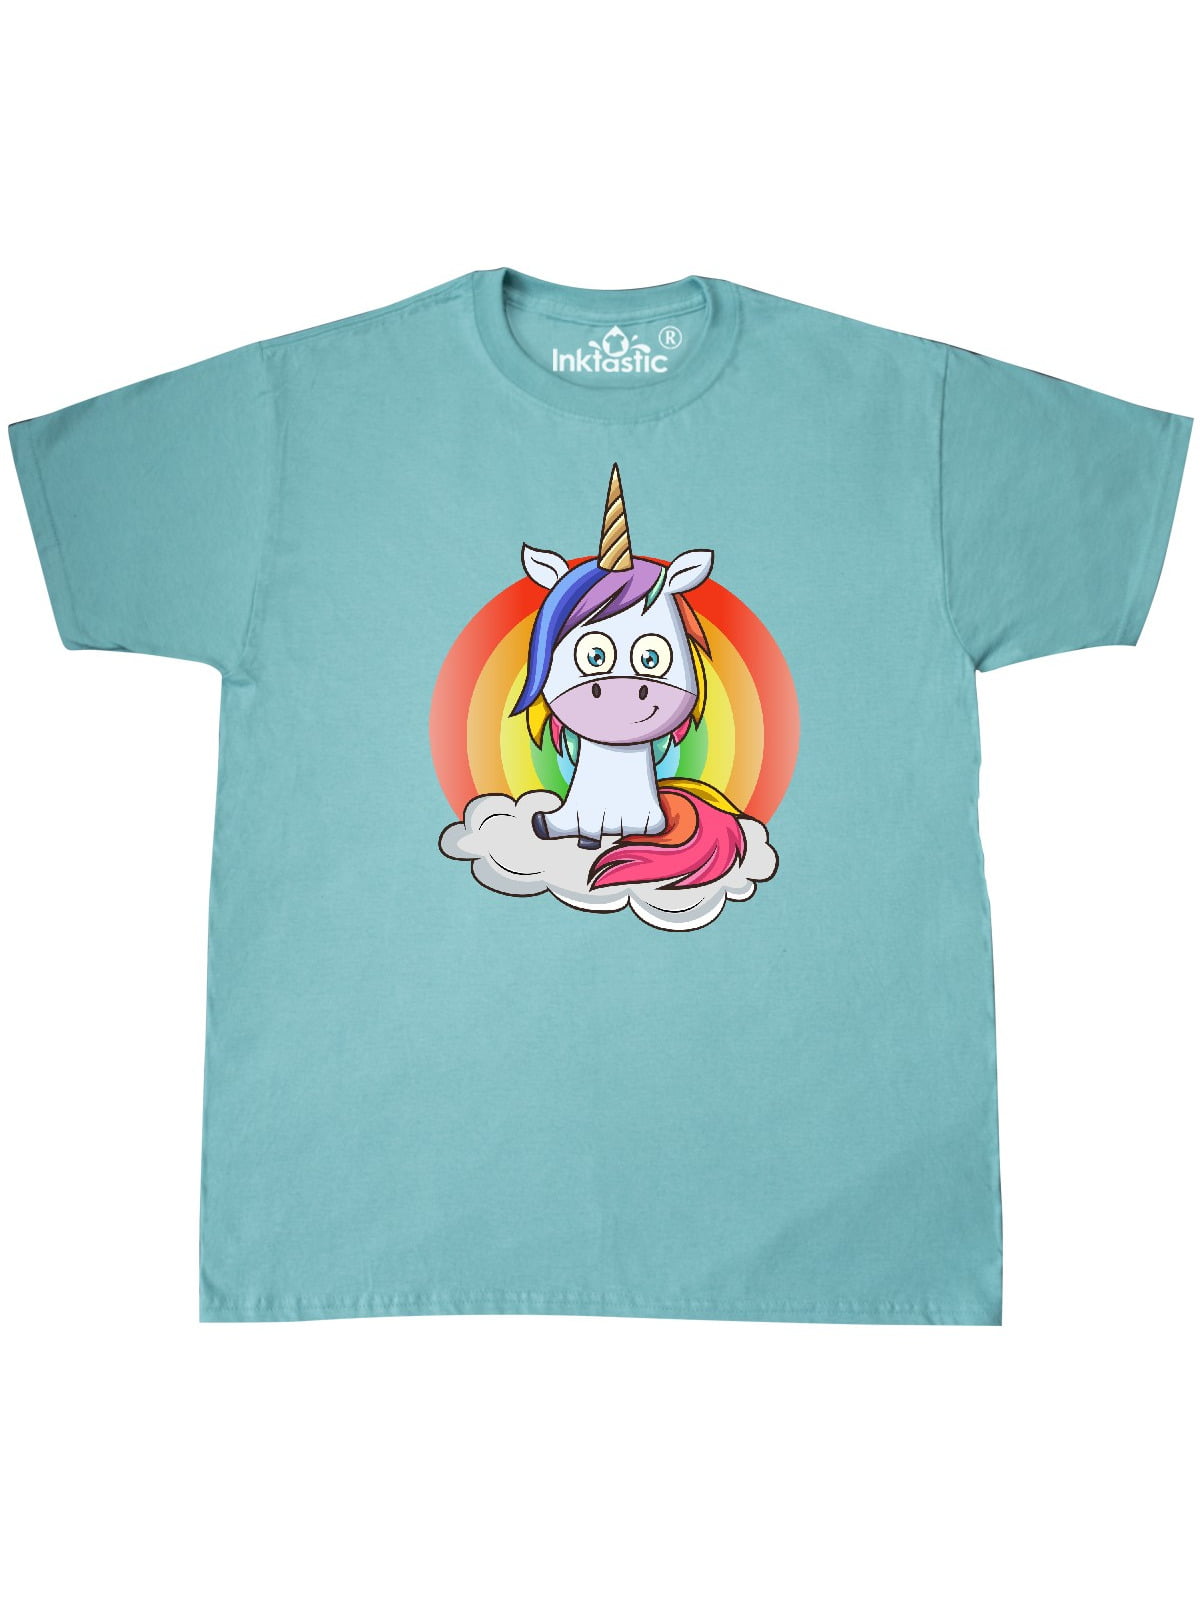 INKtastic - Unicorn Rainbow T-Shirt - Walmart.com - Walmart.com